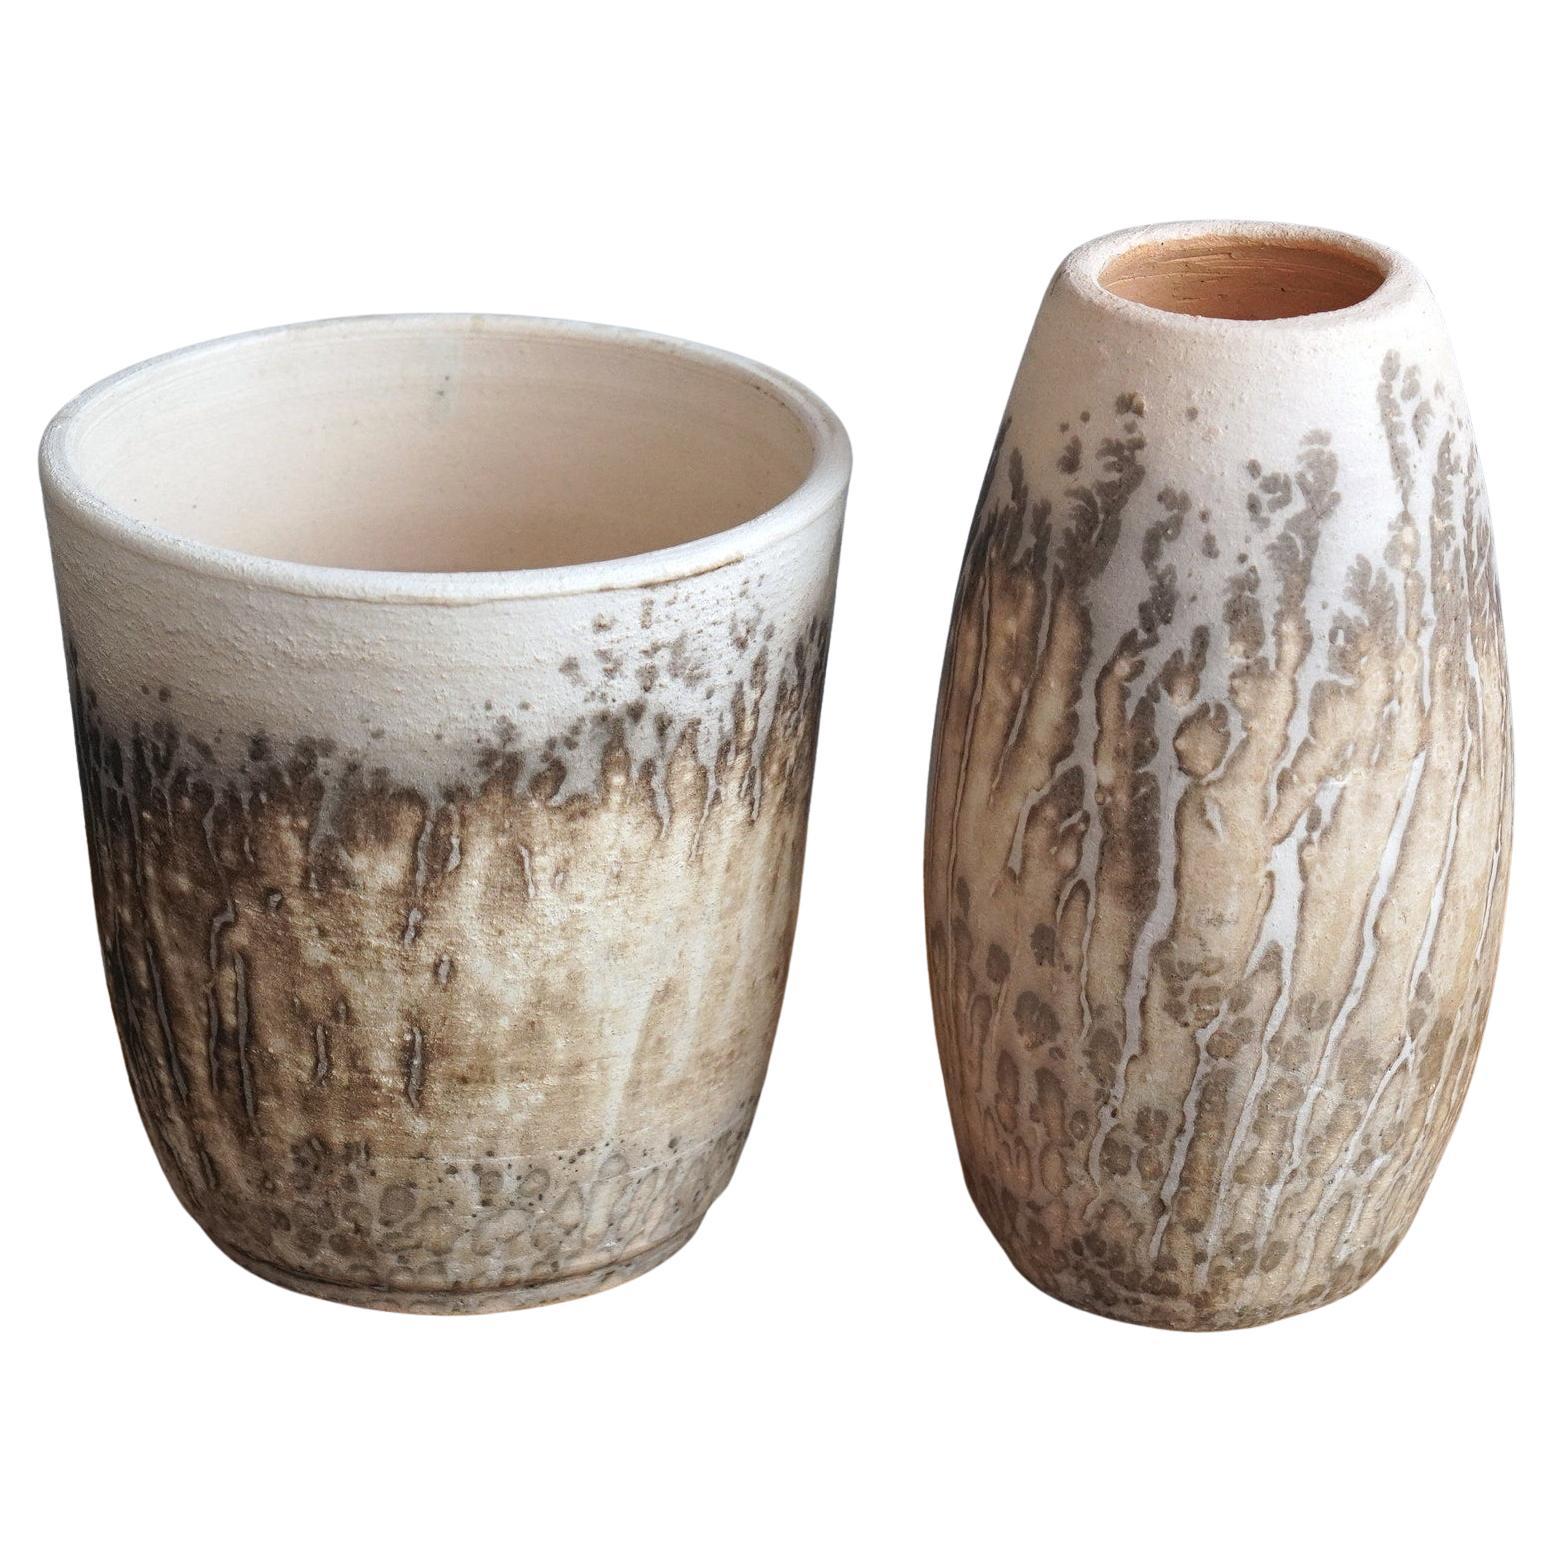 Shinsen & Tsuri Raku Pottery Vase - Obvara - Handmade Ceramic Home Decor For Sale